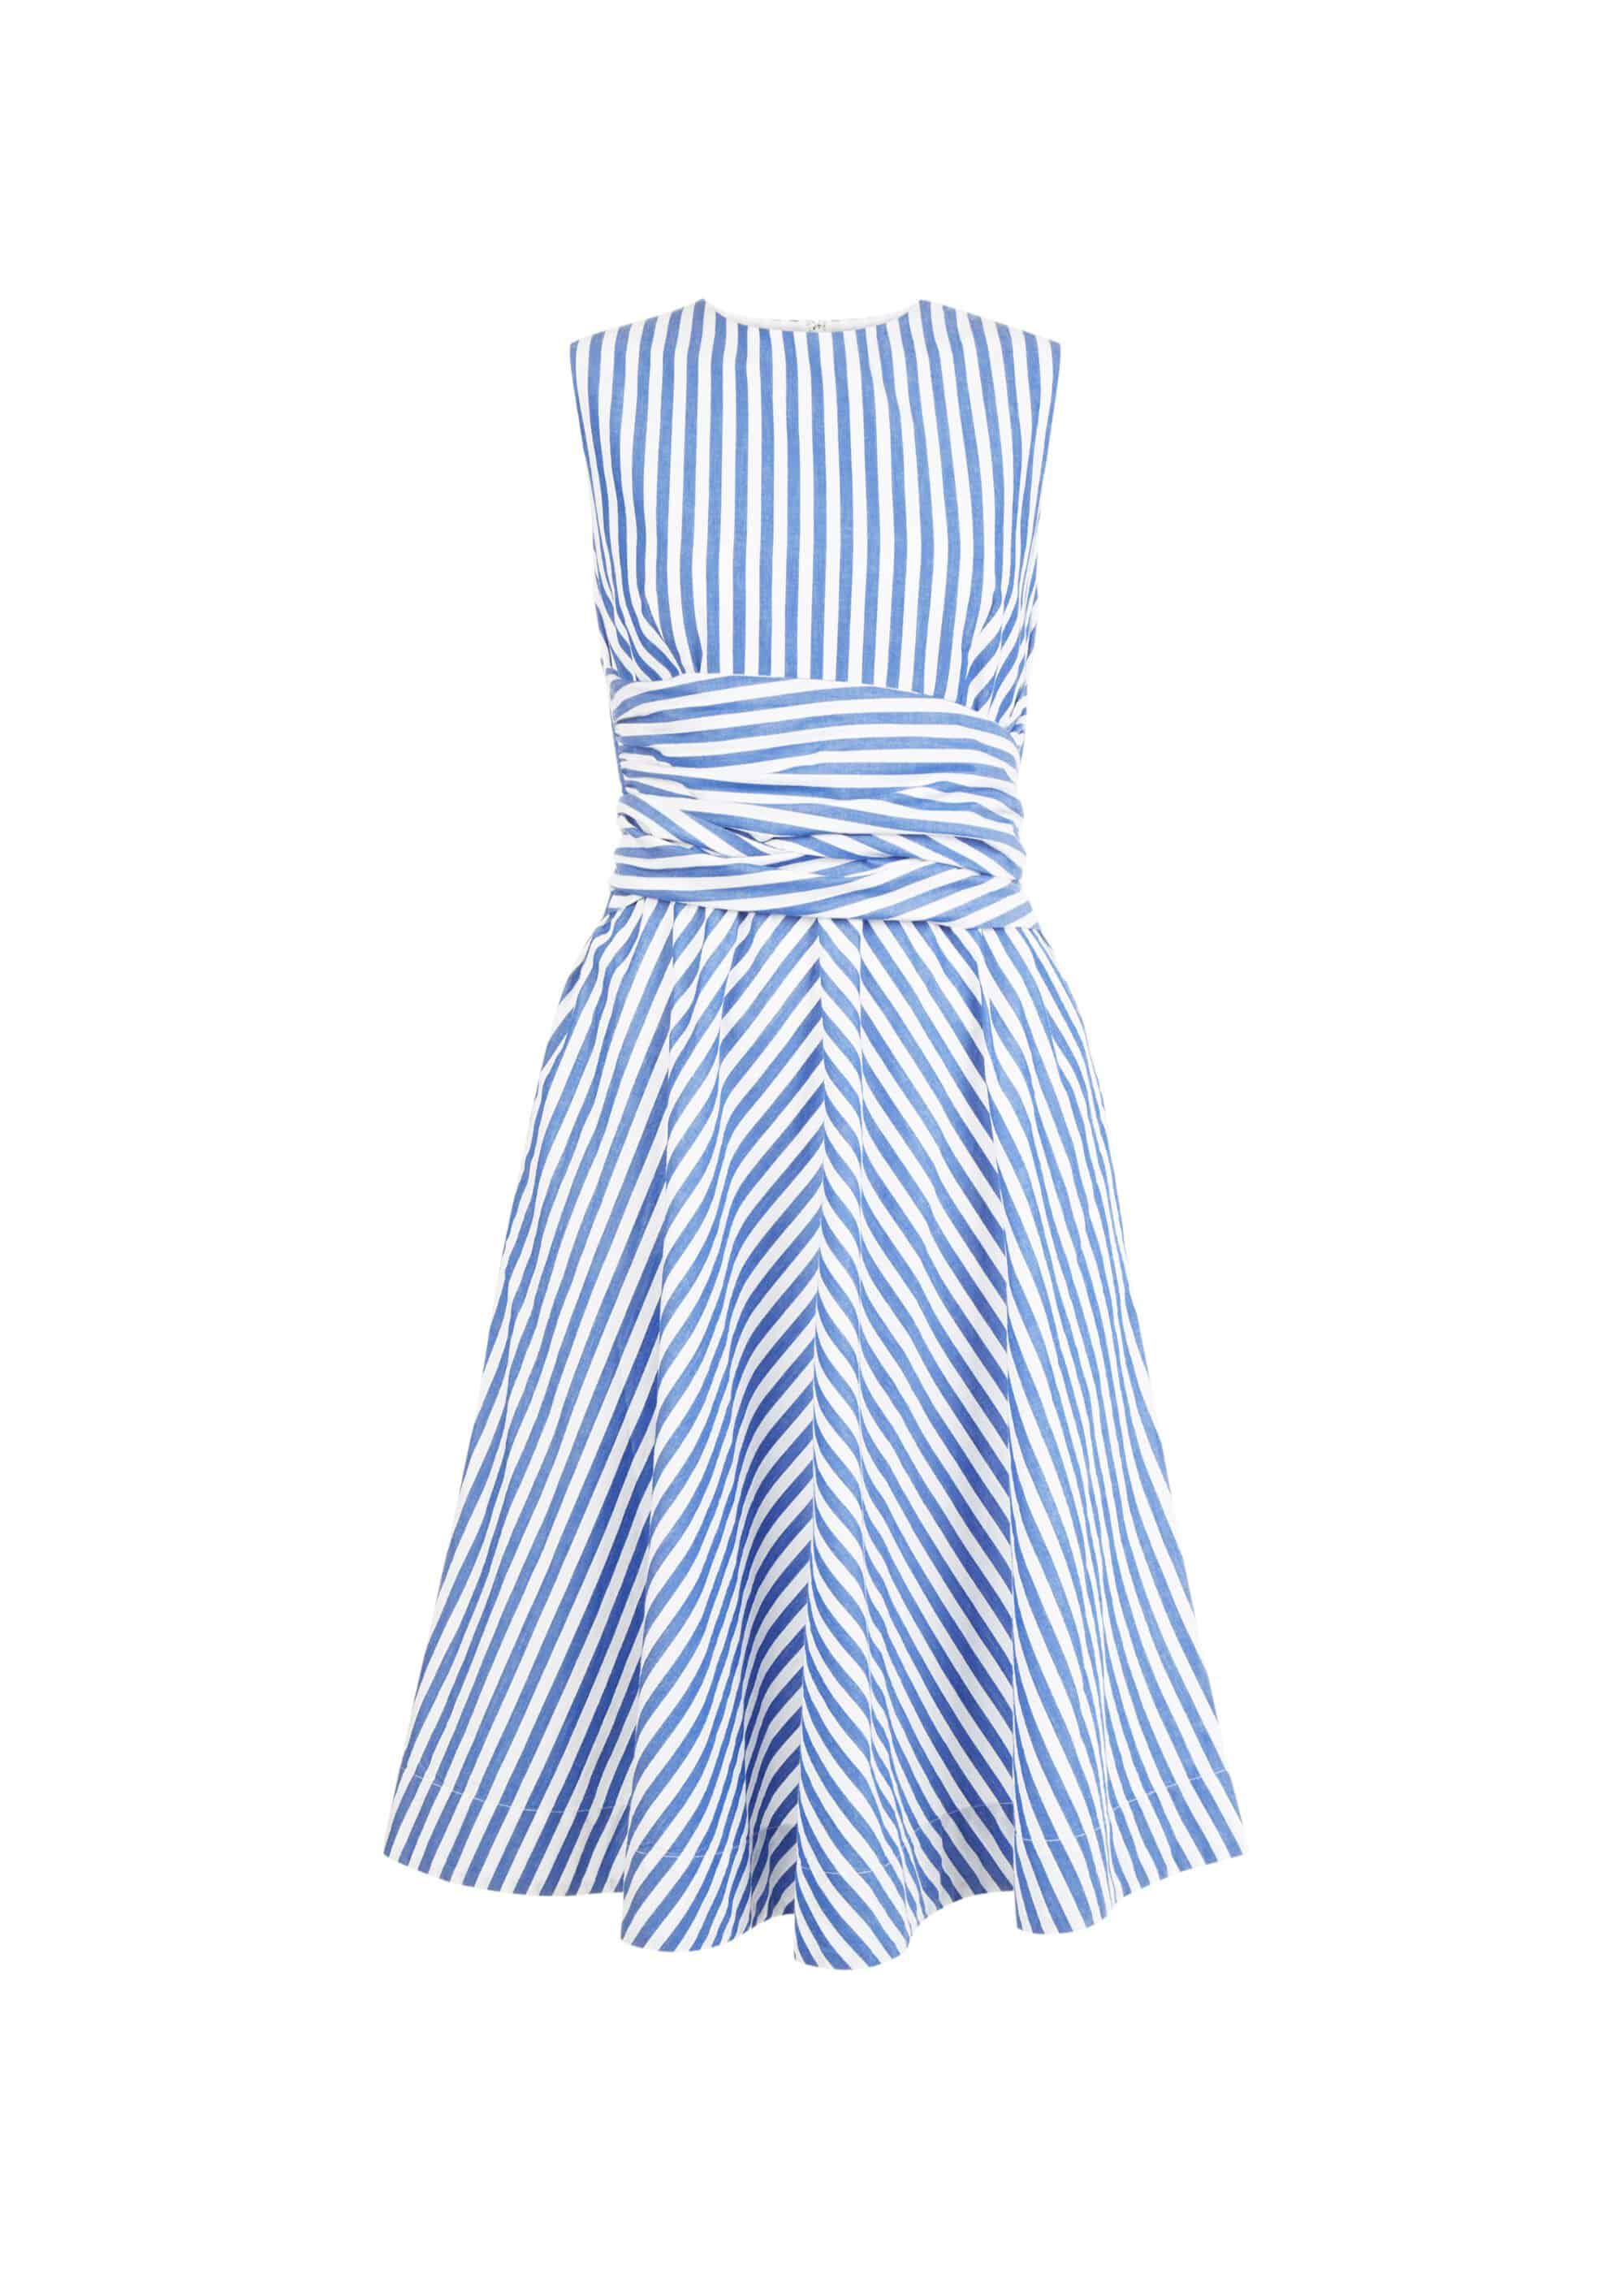 hobbs blue and white dress